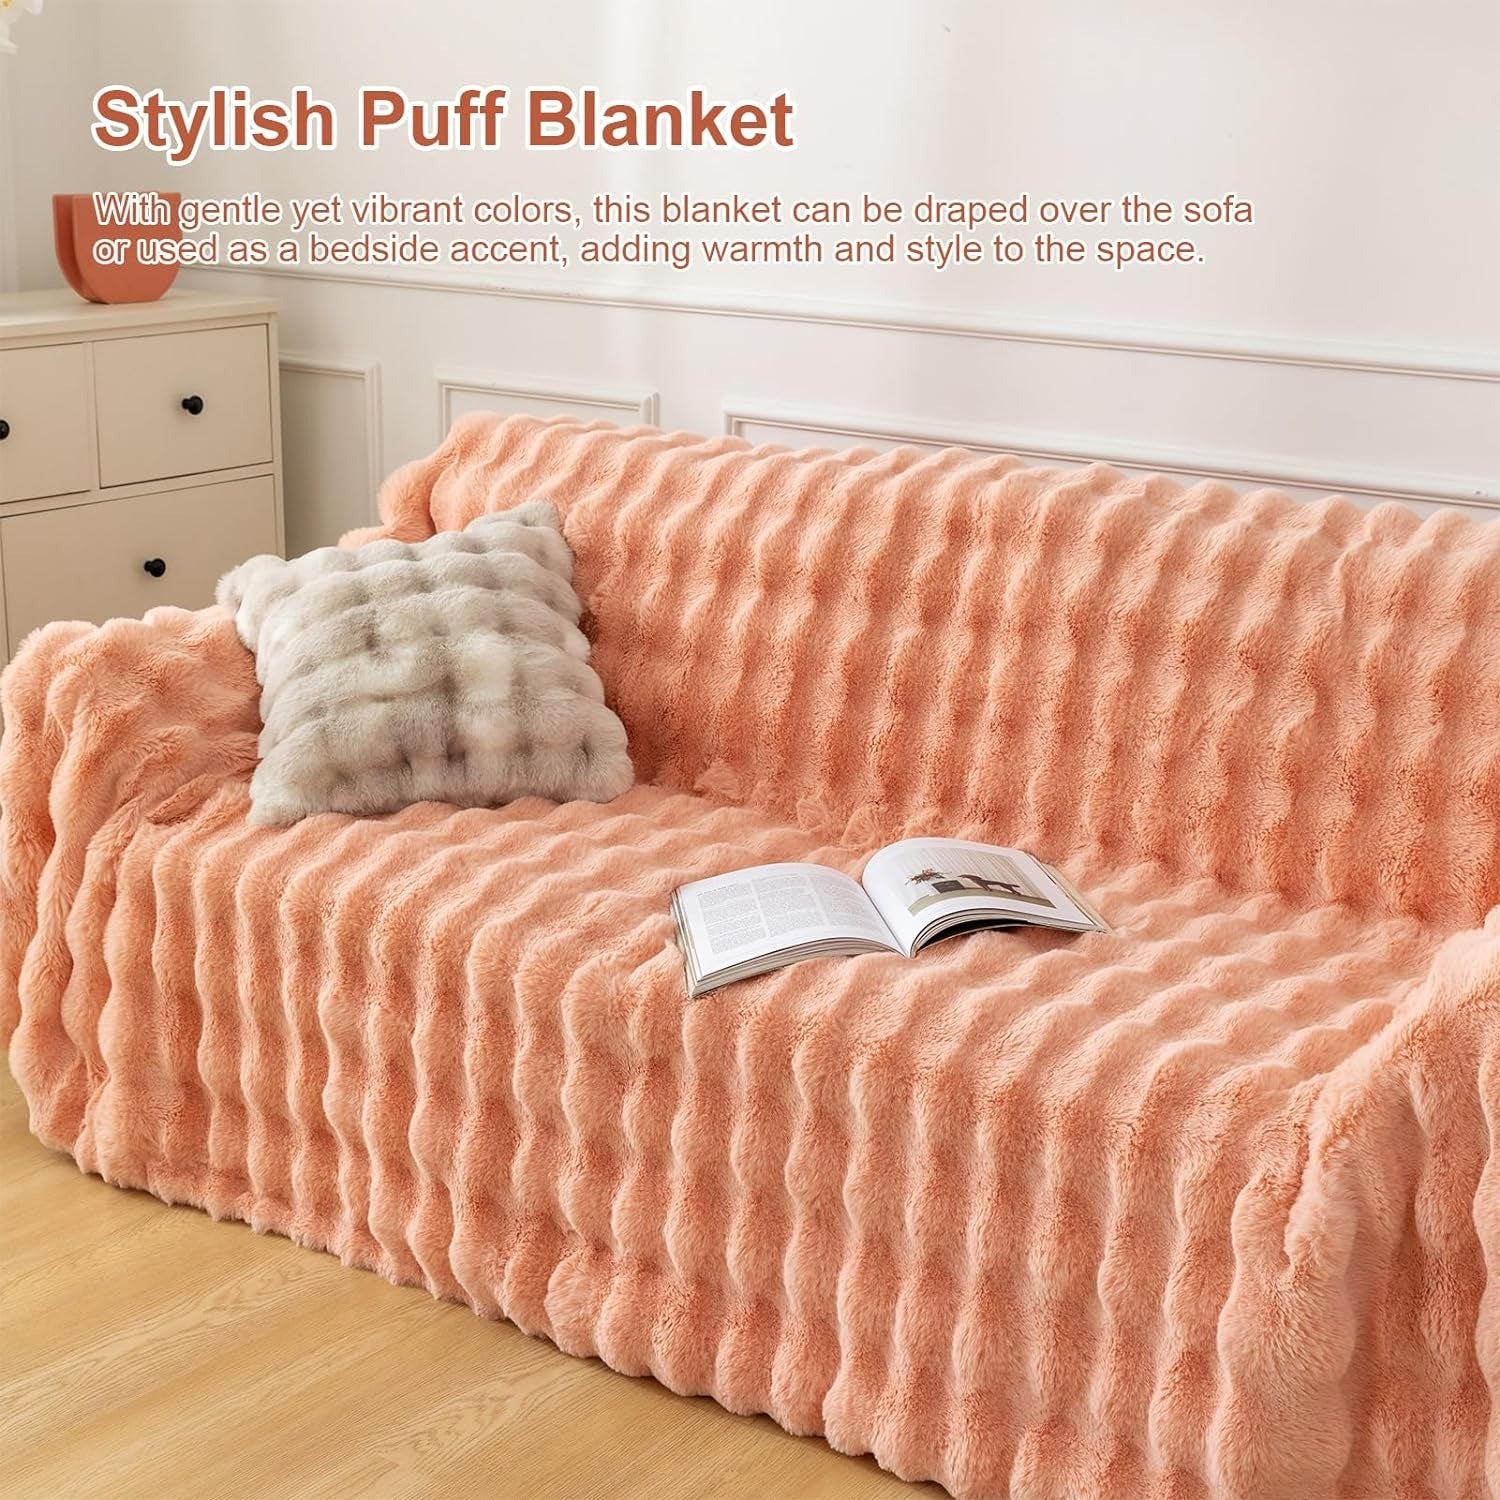 stylish puff blanket